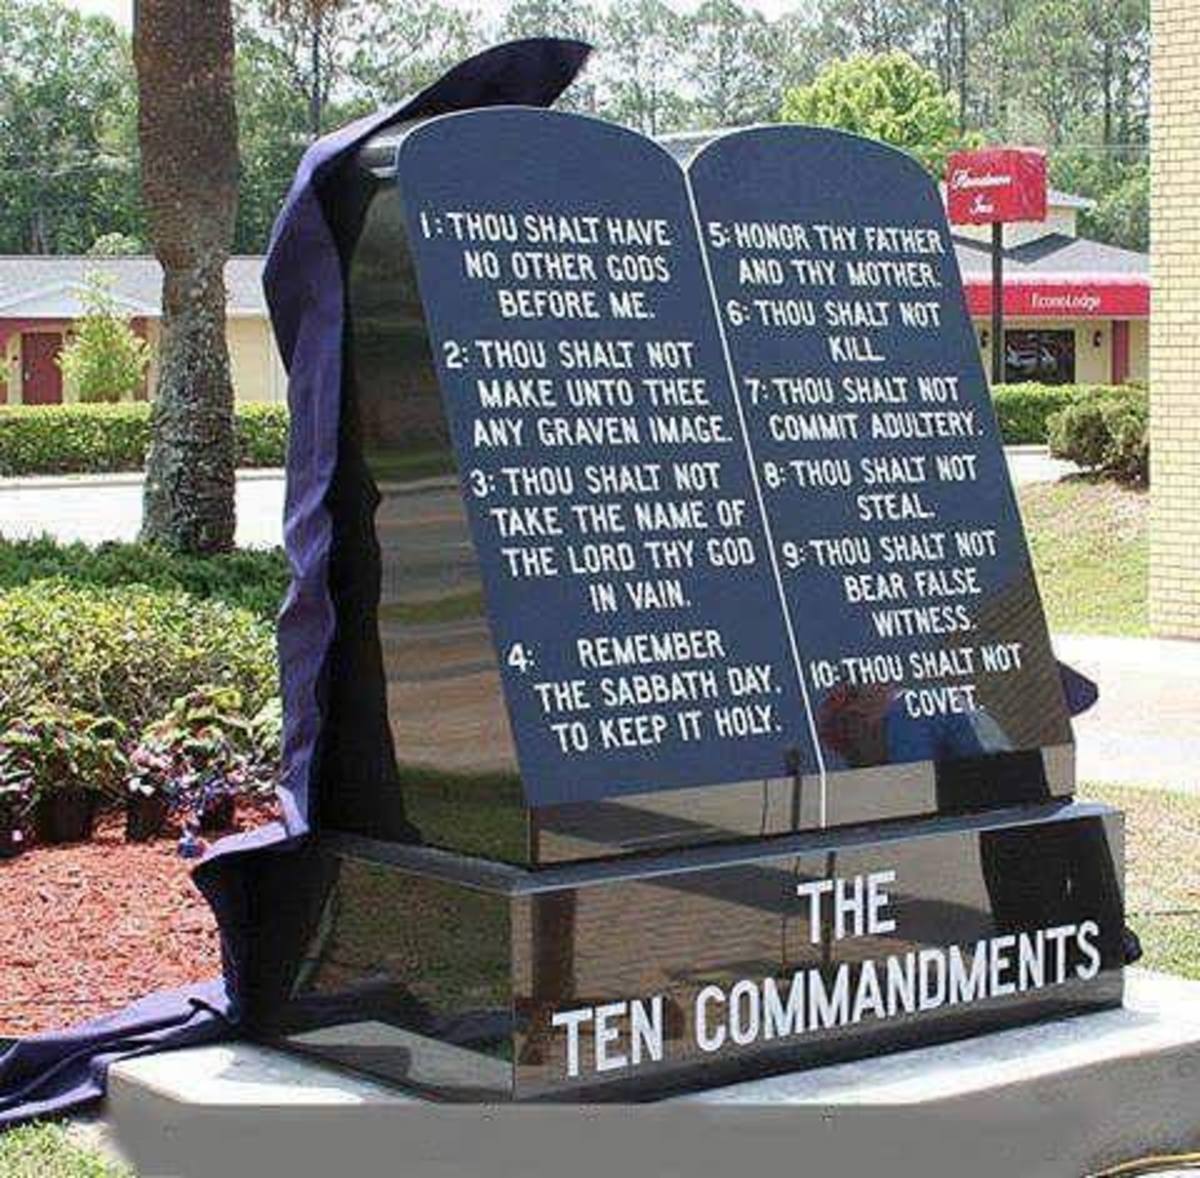 The 7th Commandment